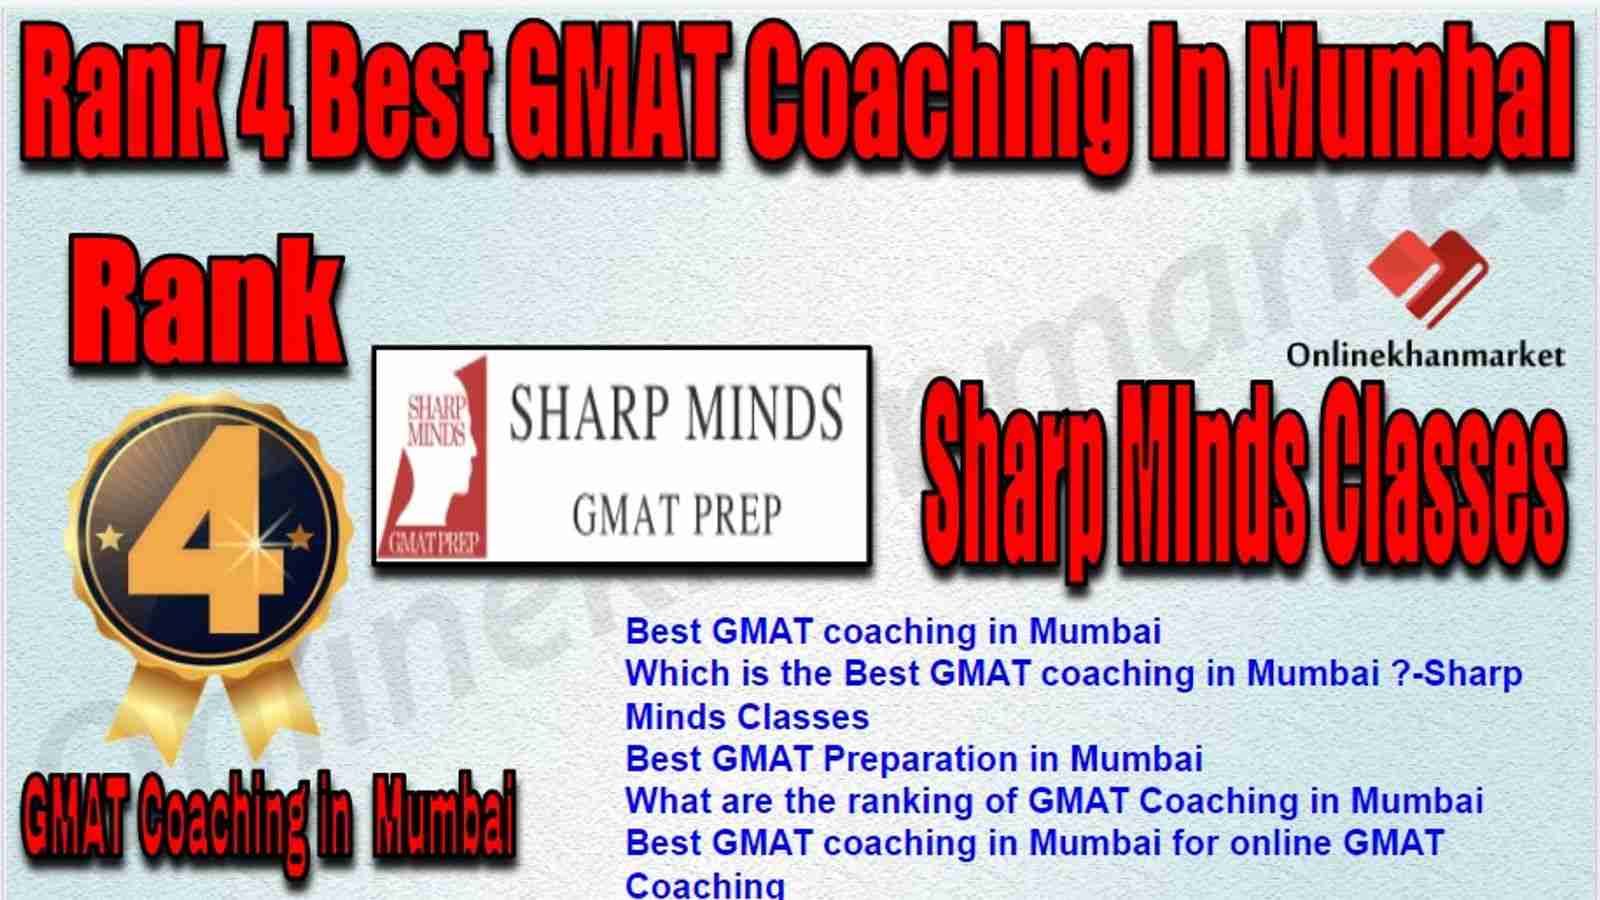 Rank 4 Best GMAT Coaching in Mumbai